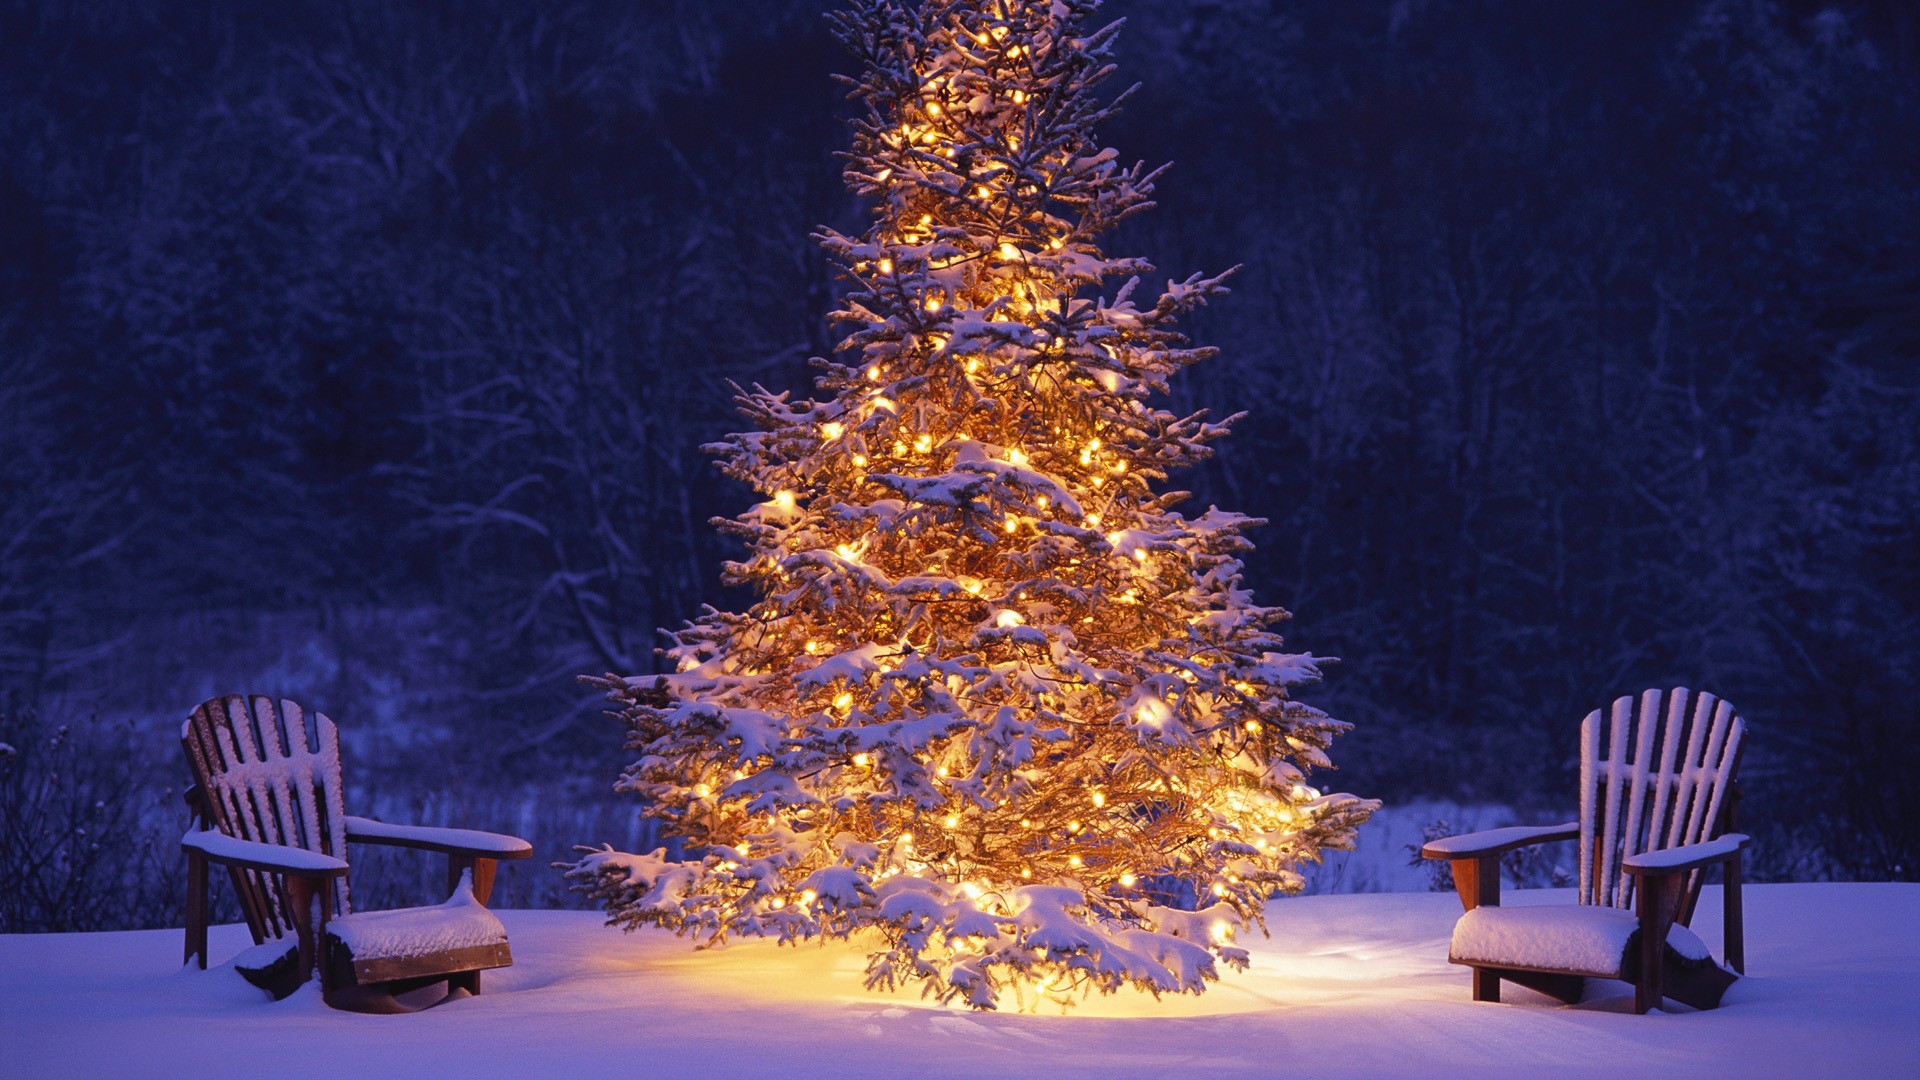 Outdoor Christmas Tree Wallpaper In Winter photos of Xmas Desktop